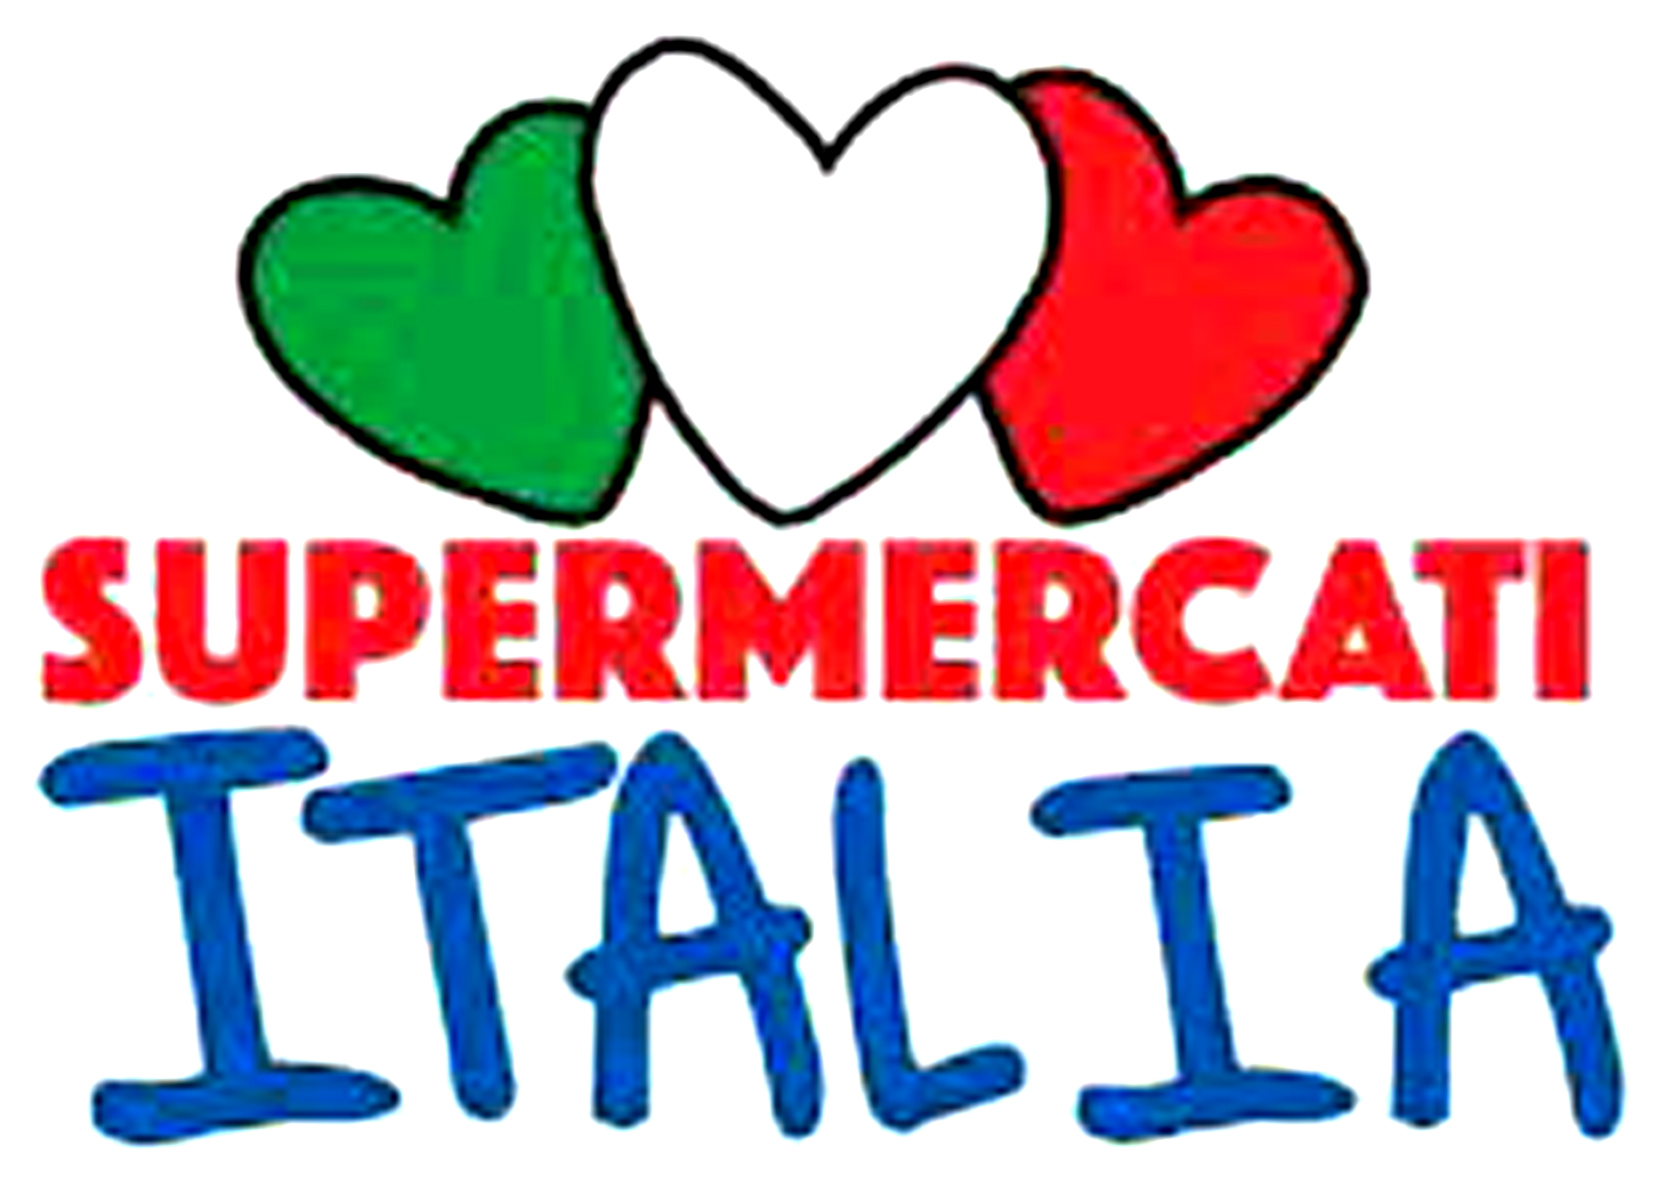 supermercati italia myradio taurisano